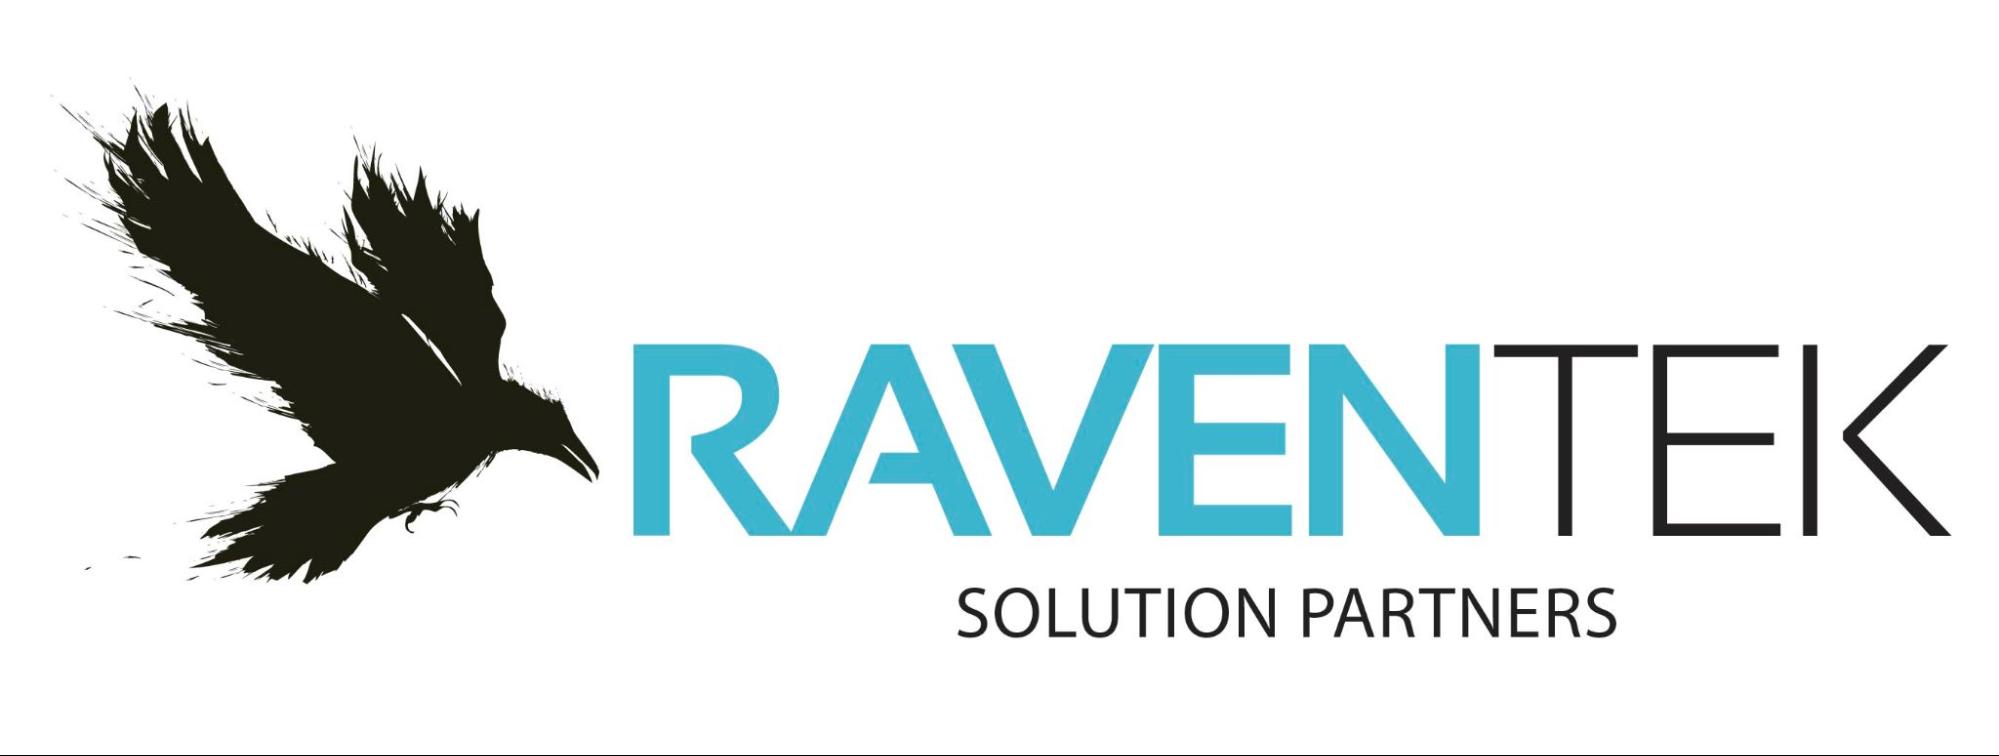 RavenTek解决方案合作伙伴